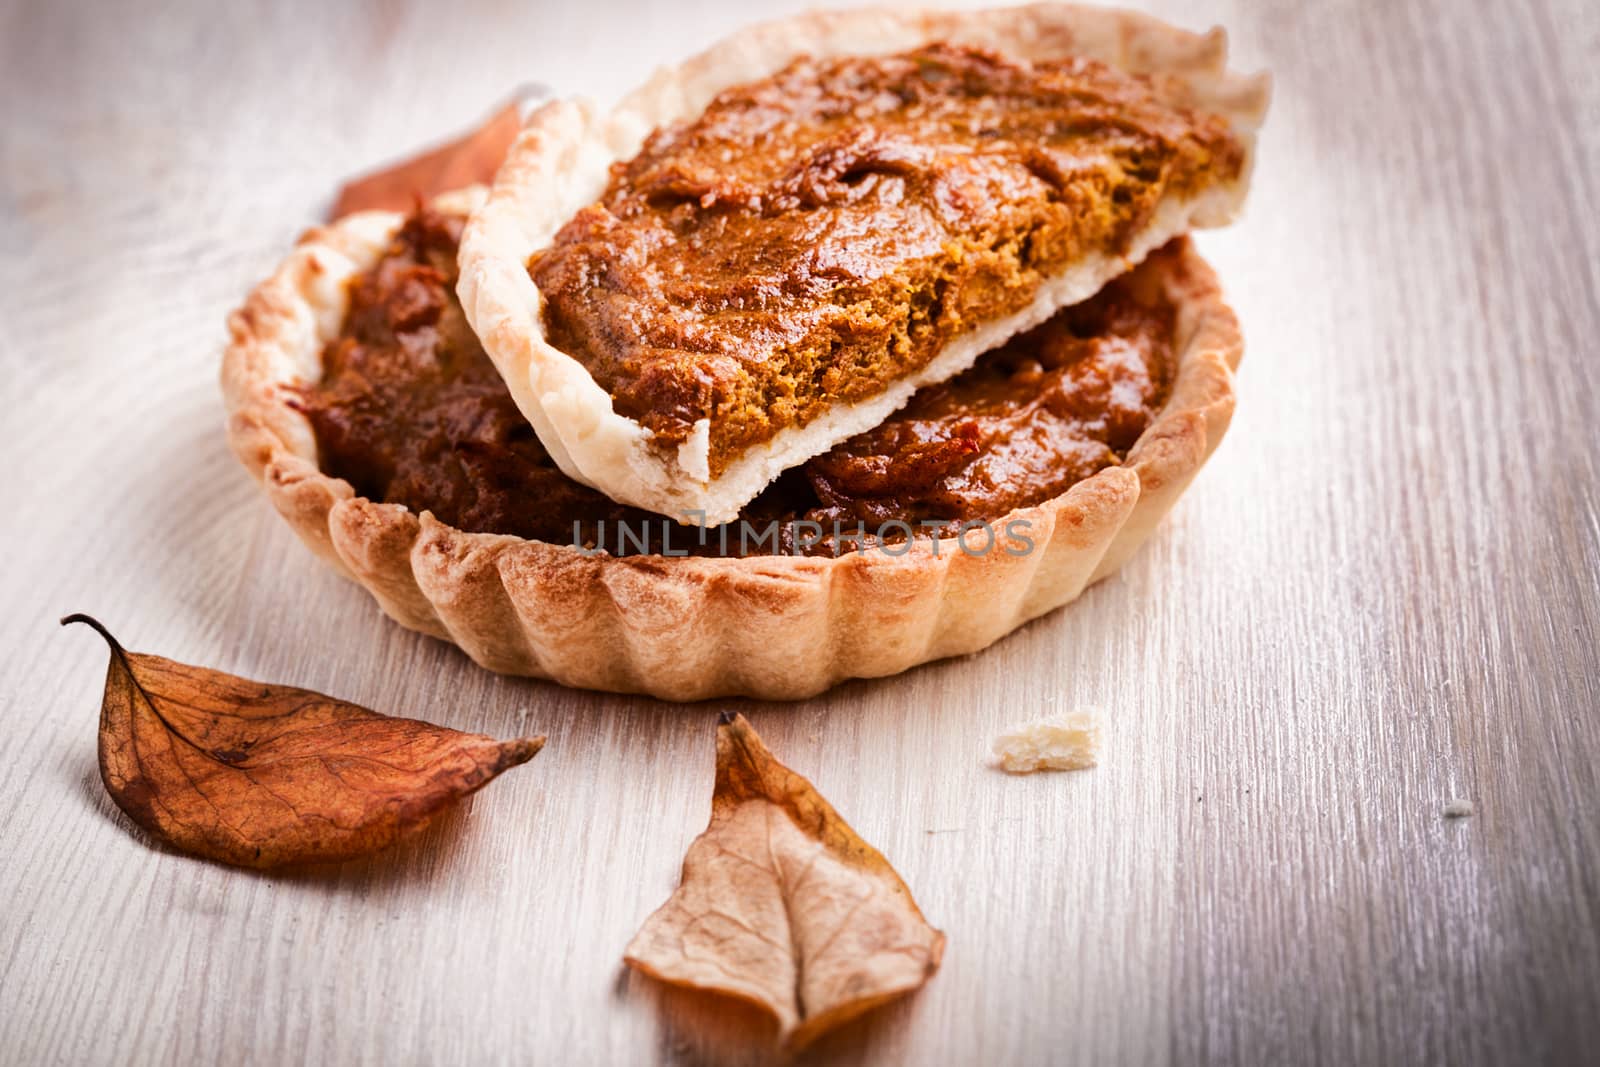 Slices of Pumpkin pie by supercat67